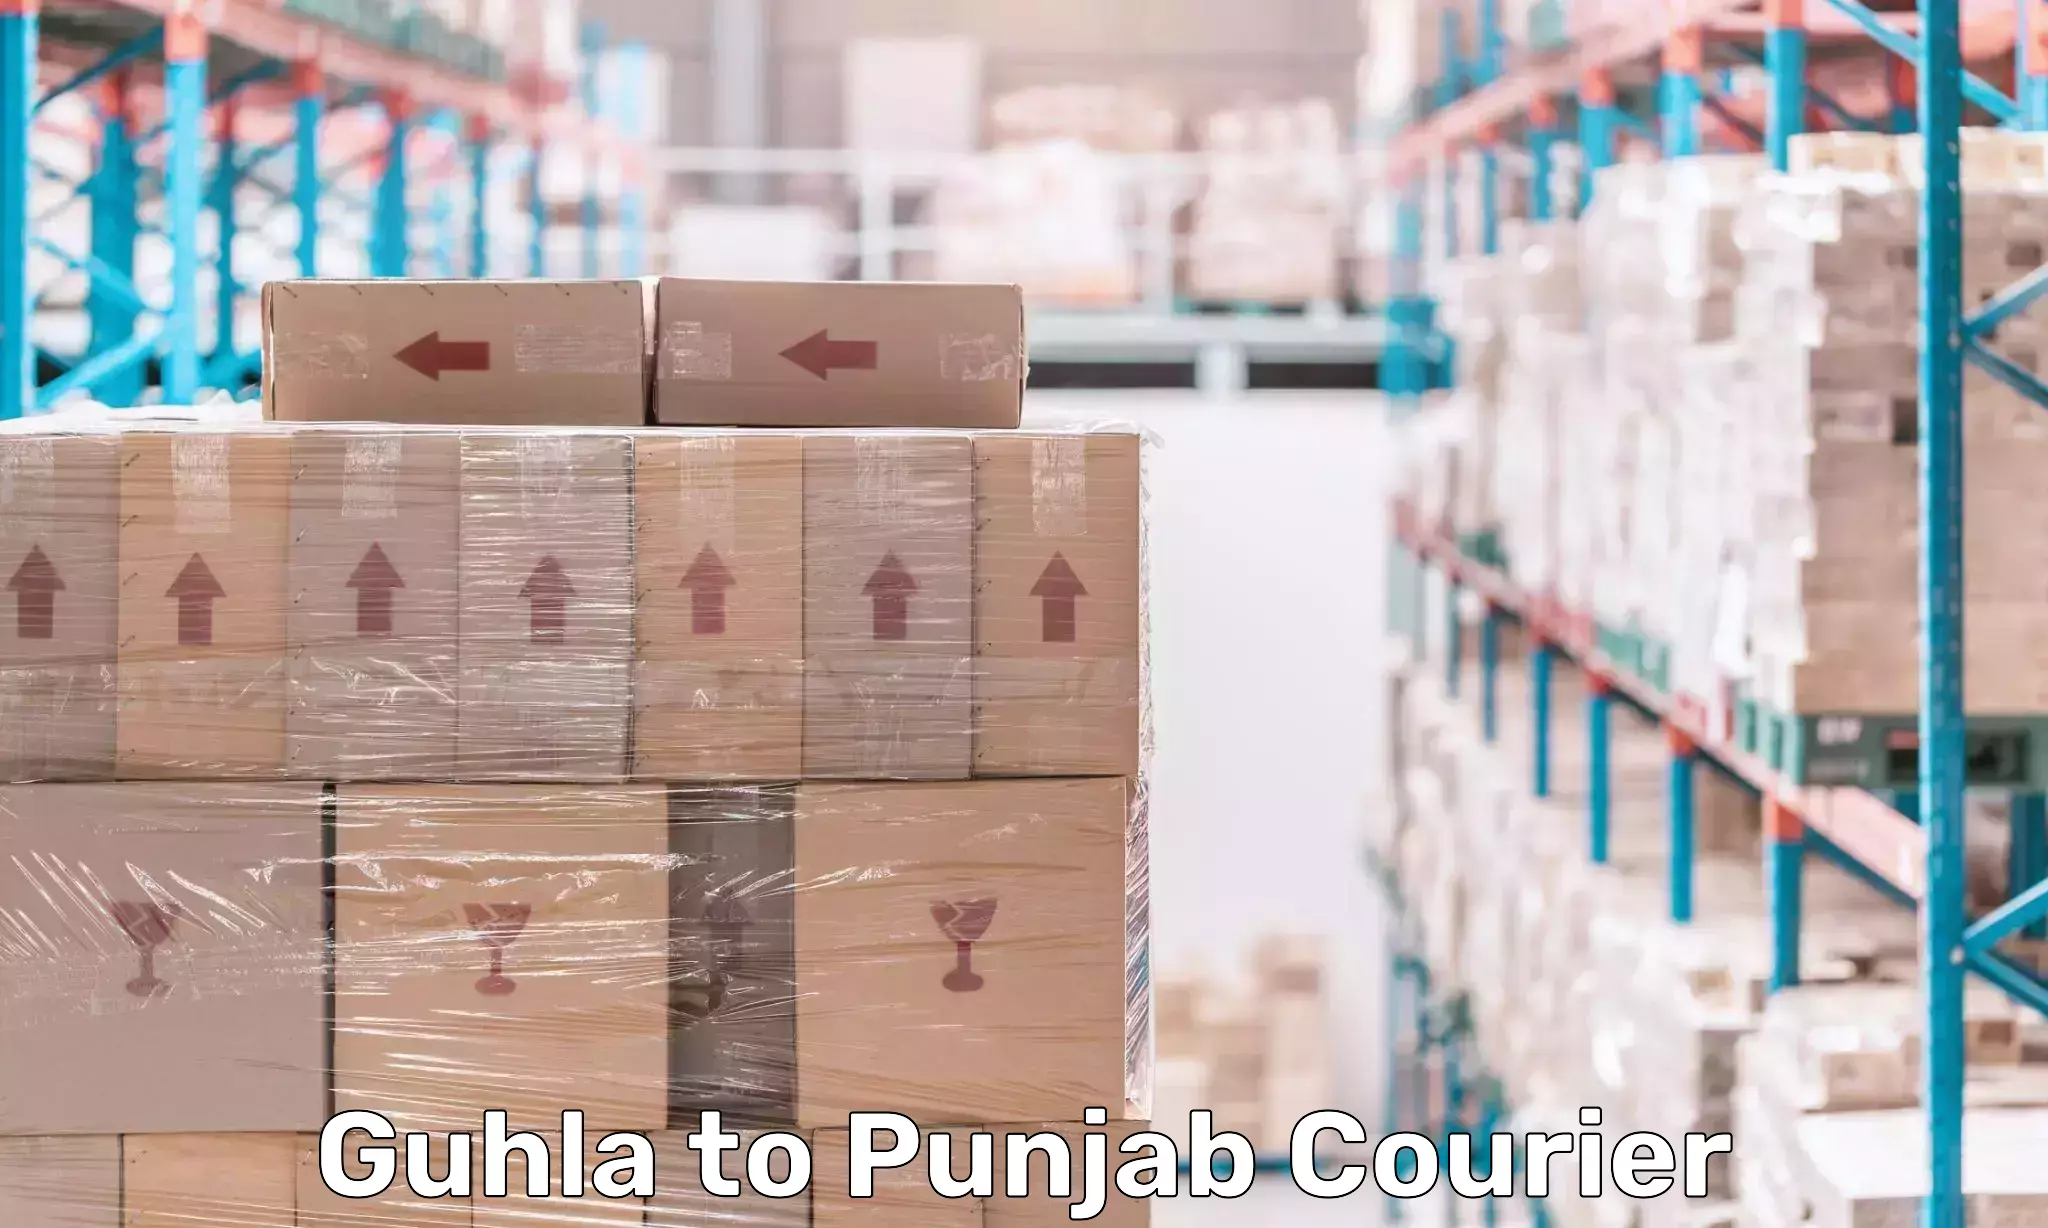 Efficient order fulfillment Guhla to Punjab